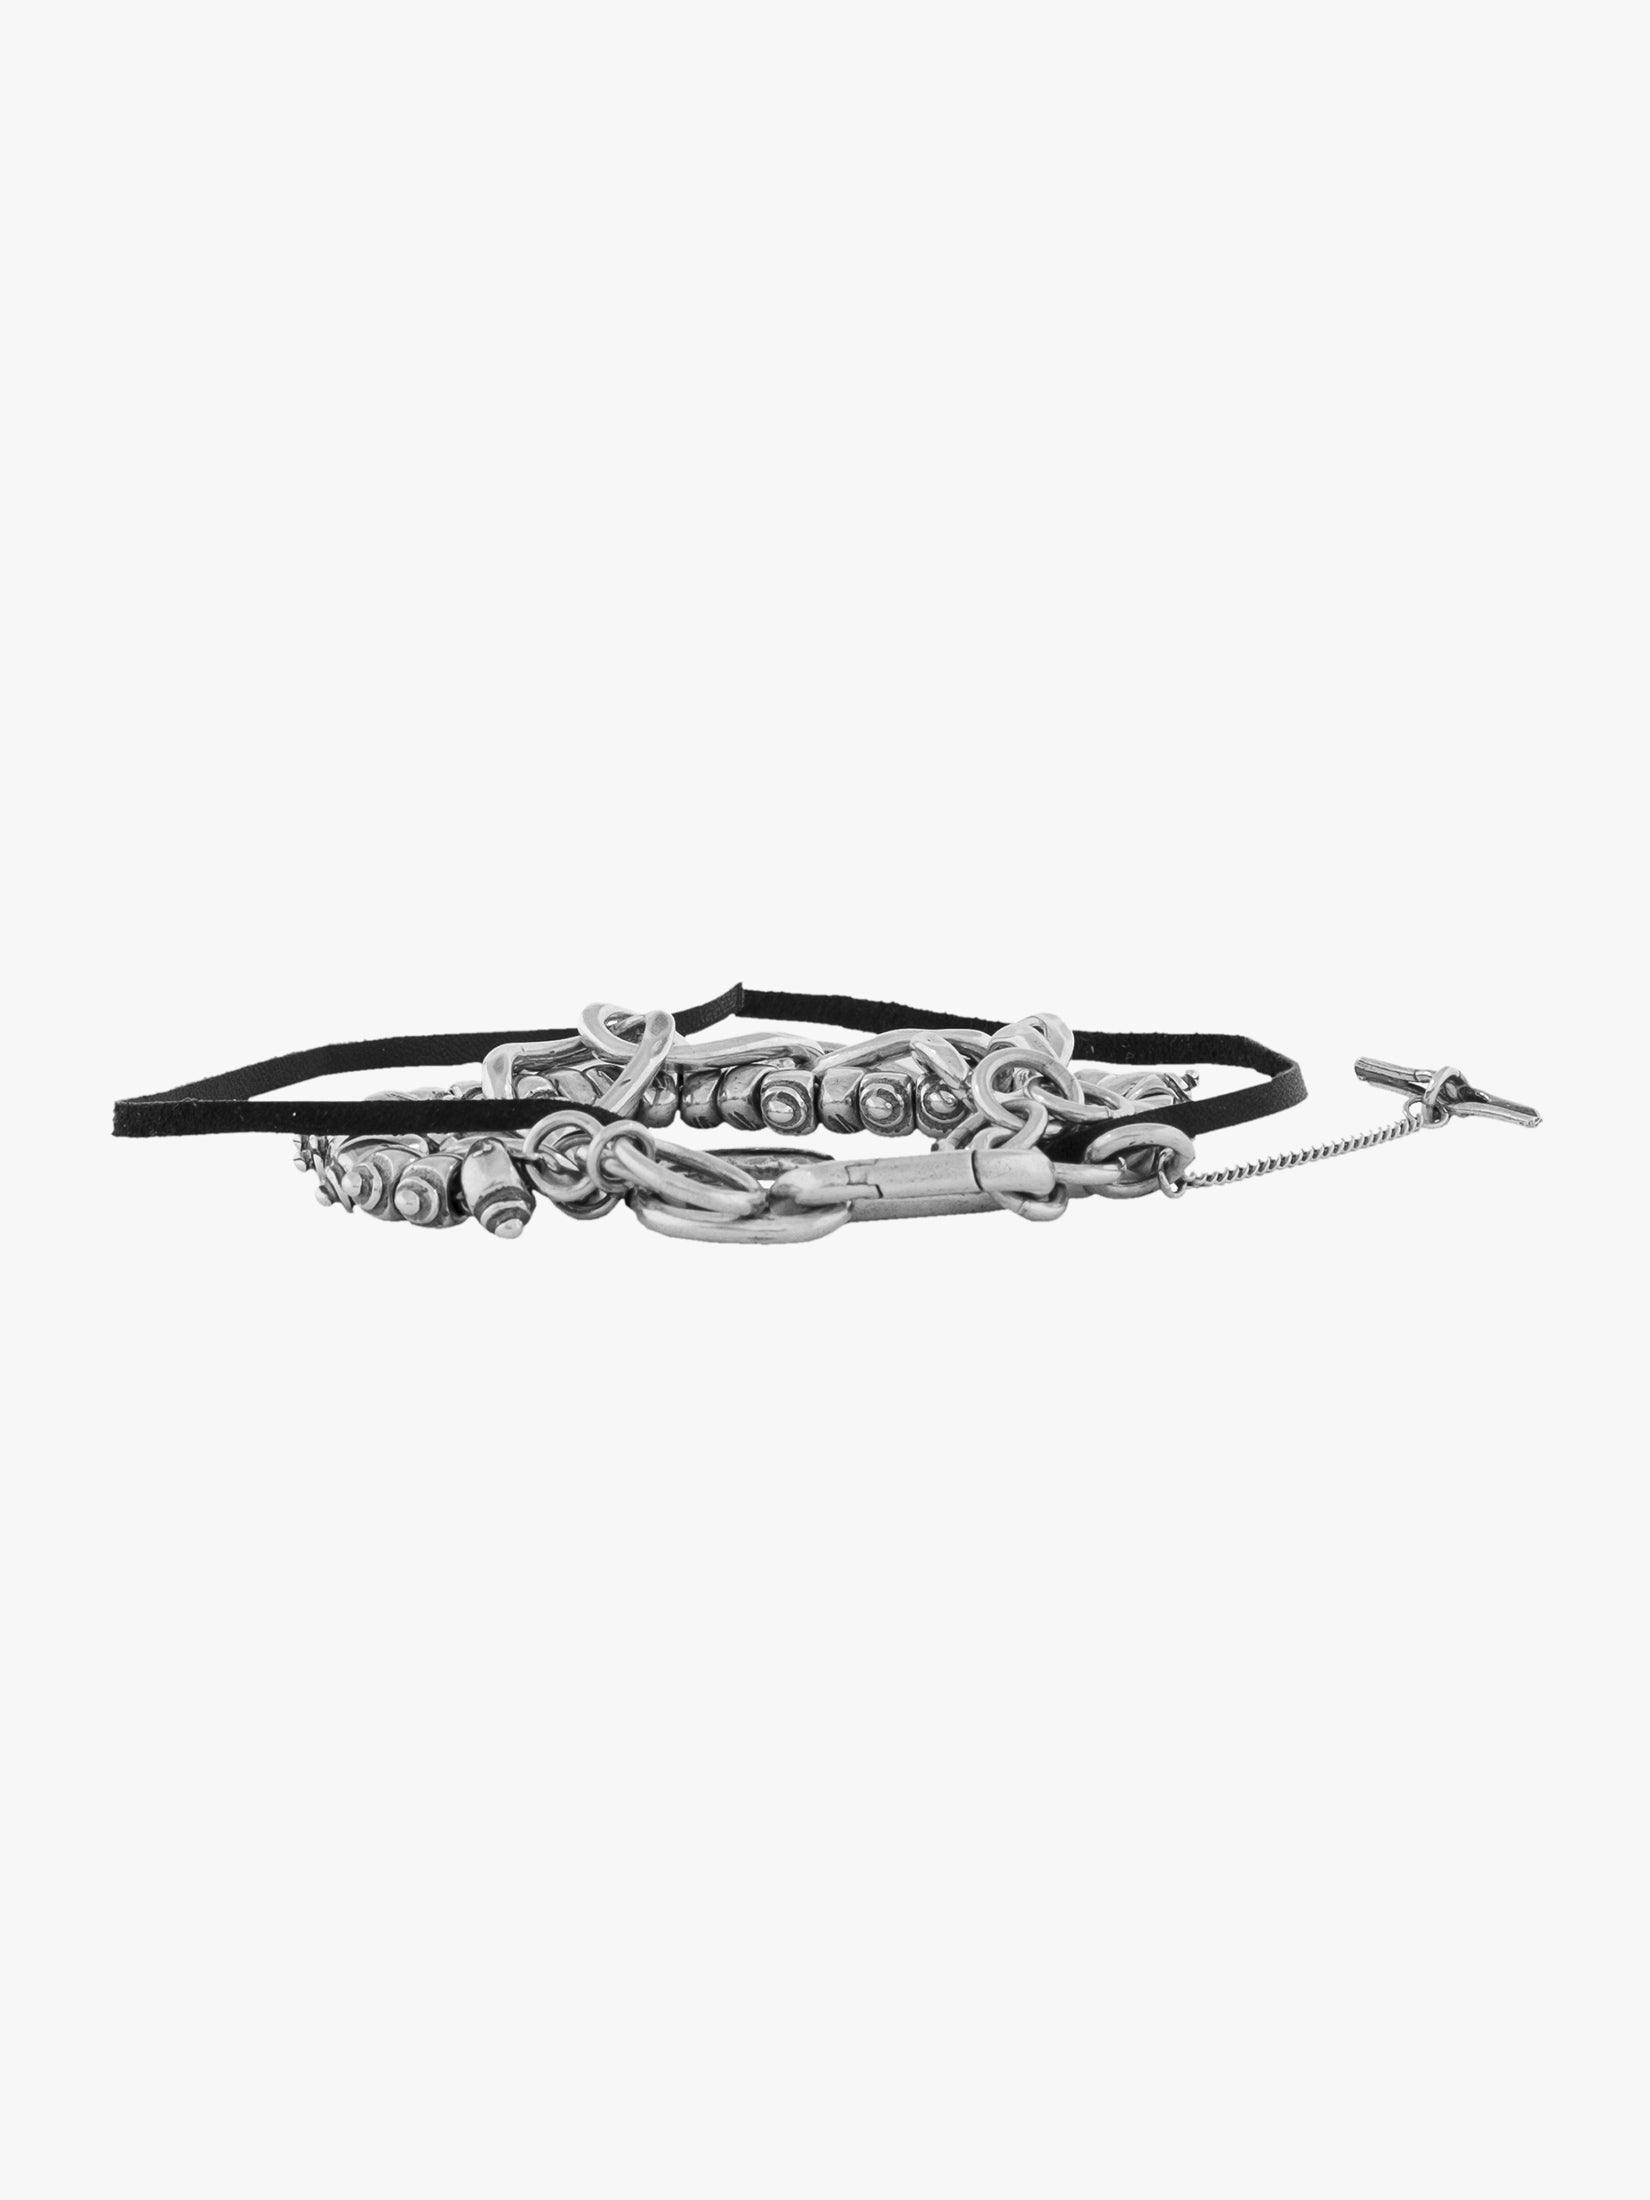 GOTI BR1154 Oxidised Silver/Leather Bracelet